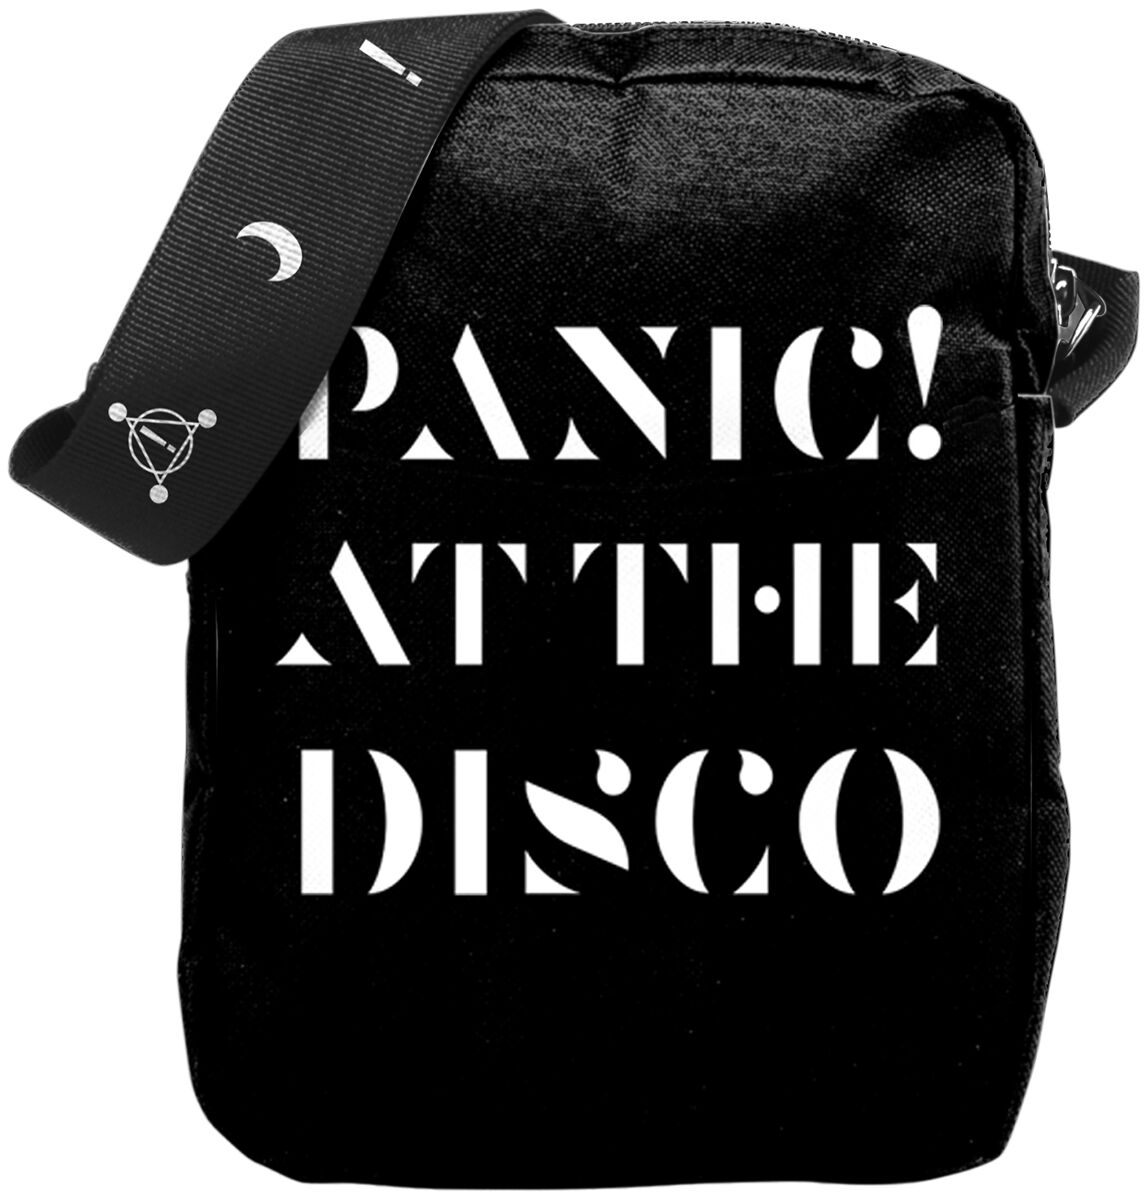 Panic! At The Disco Death of a Bachelor Shoulder Bag black